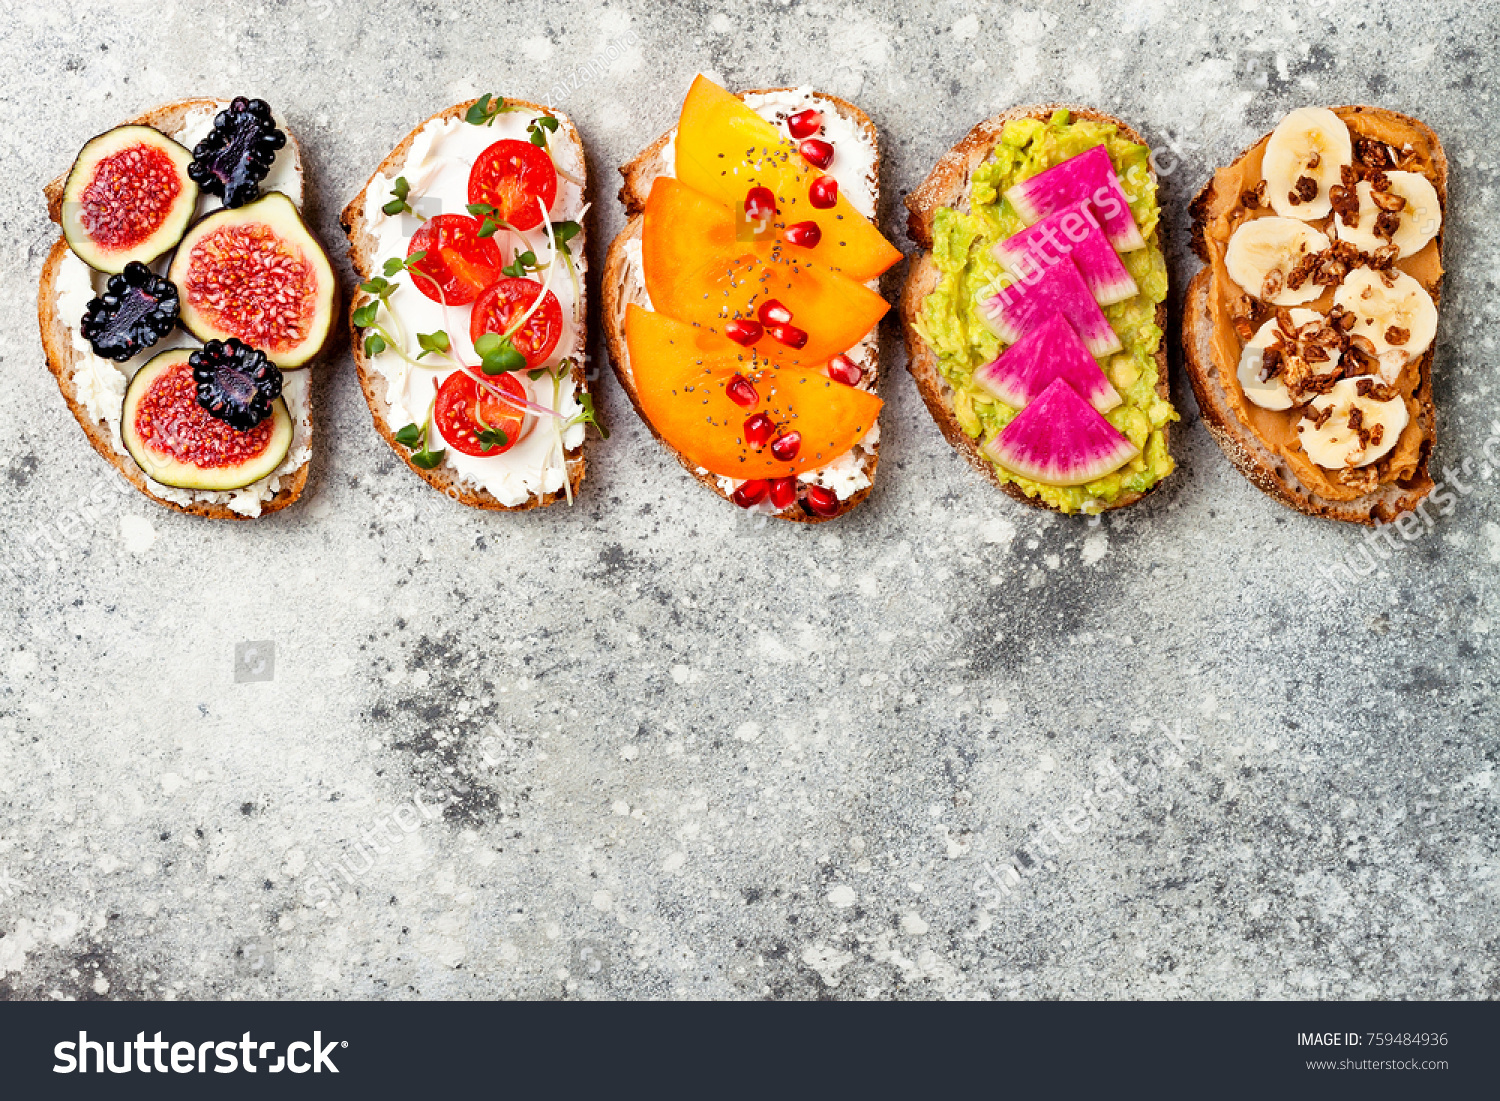 Healthy breakfast toasts with peanut butter, banana, chocolate granola, avocado, watermelon radish, persimmon, pomegranate, chia seeds, tomato, figs, blackberry. Copy space #759484936